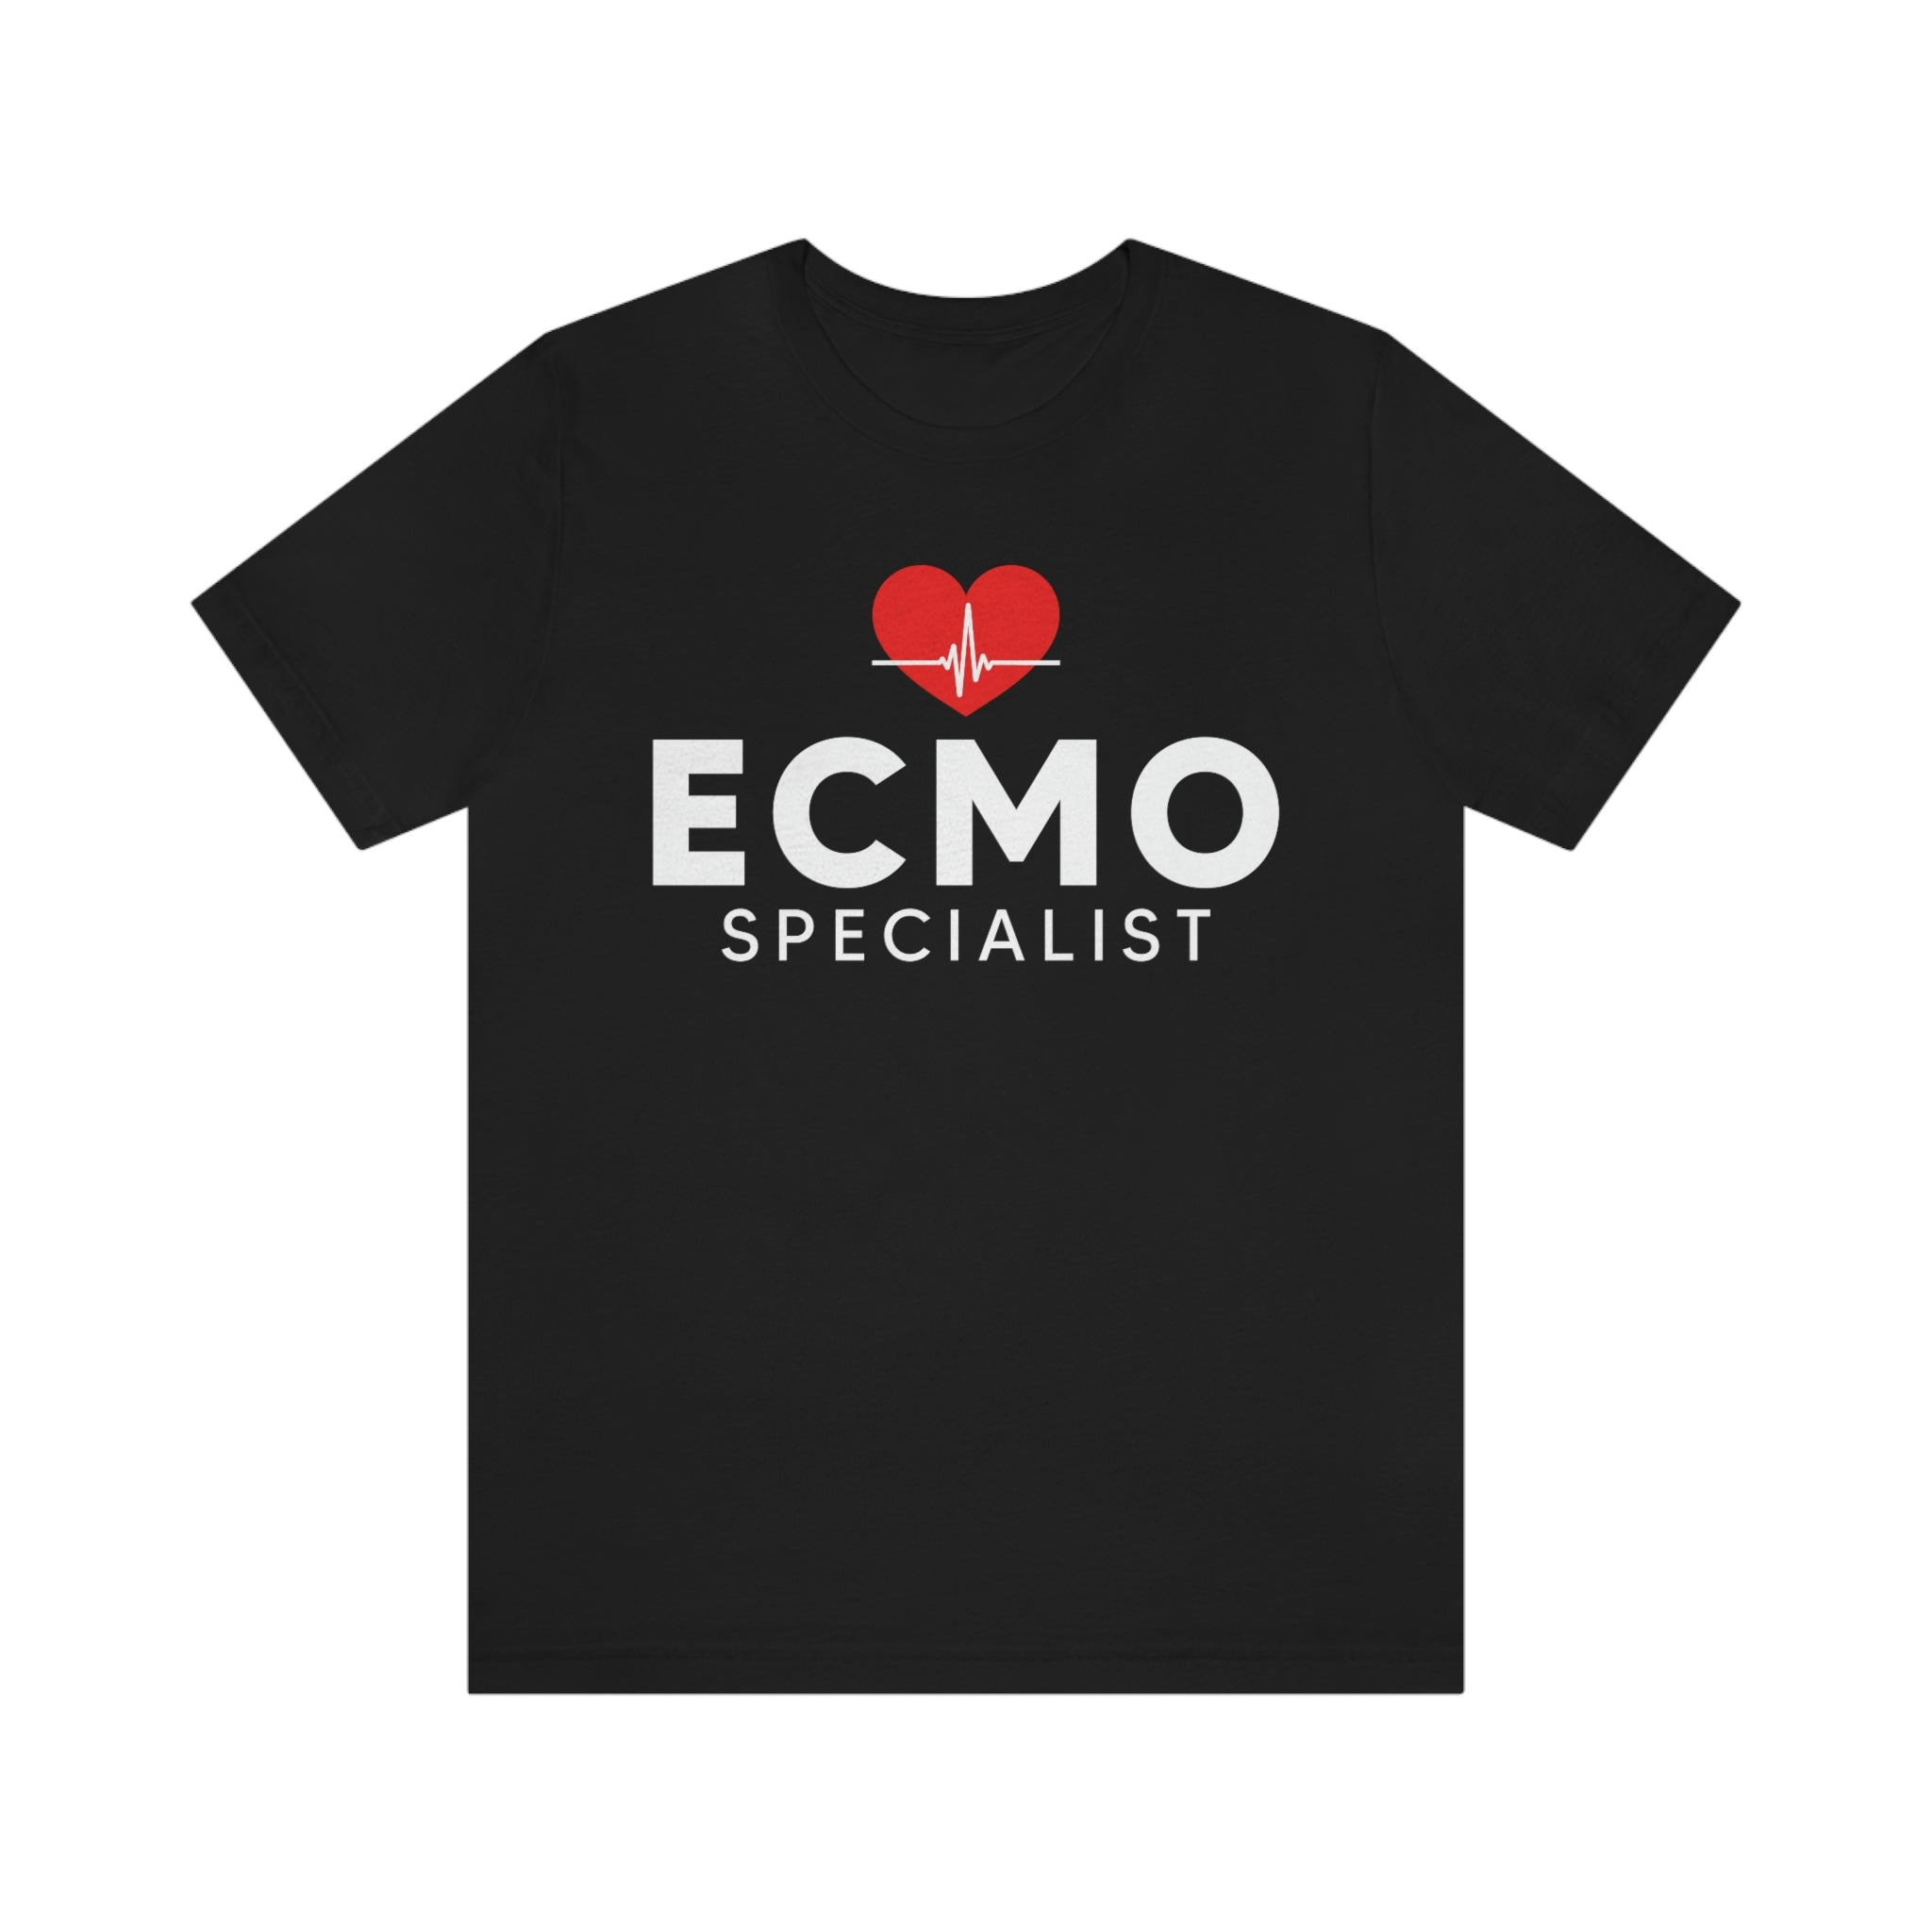 ECMO Specialist (T-Shirt)